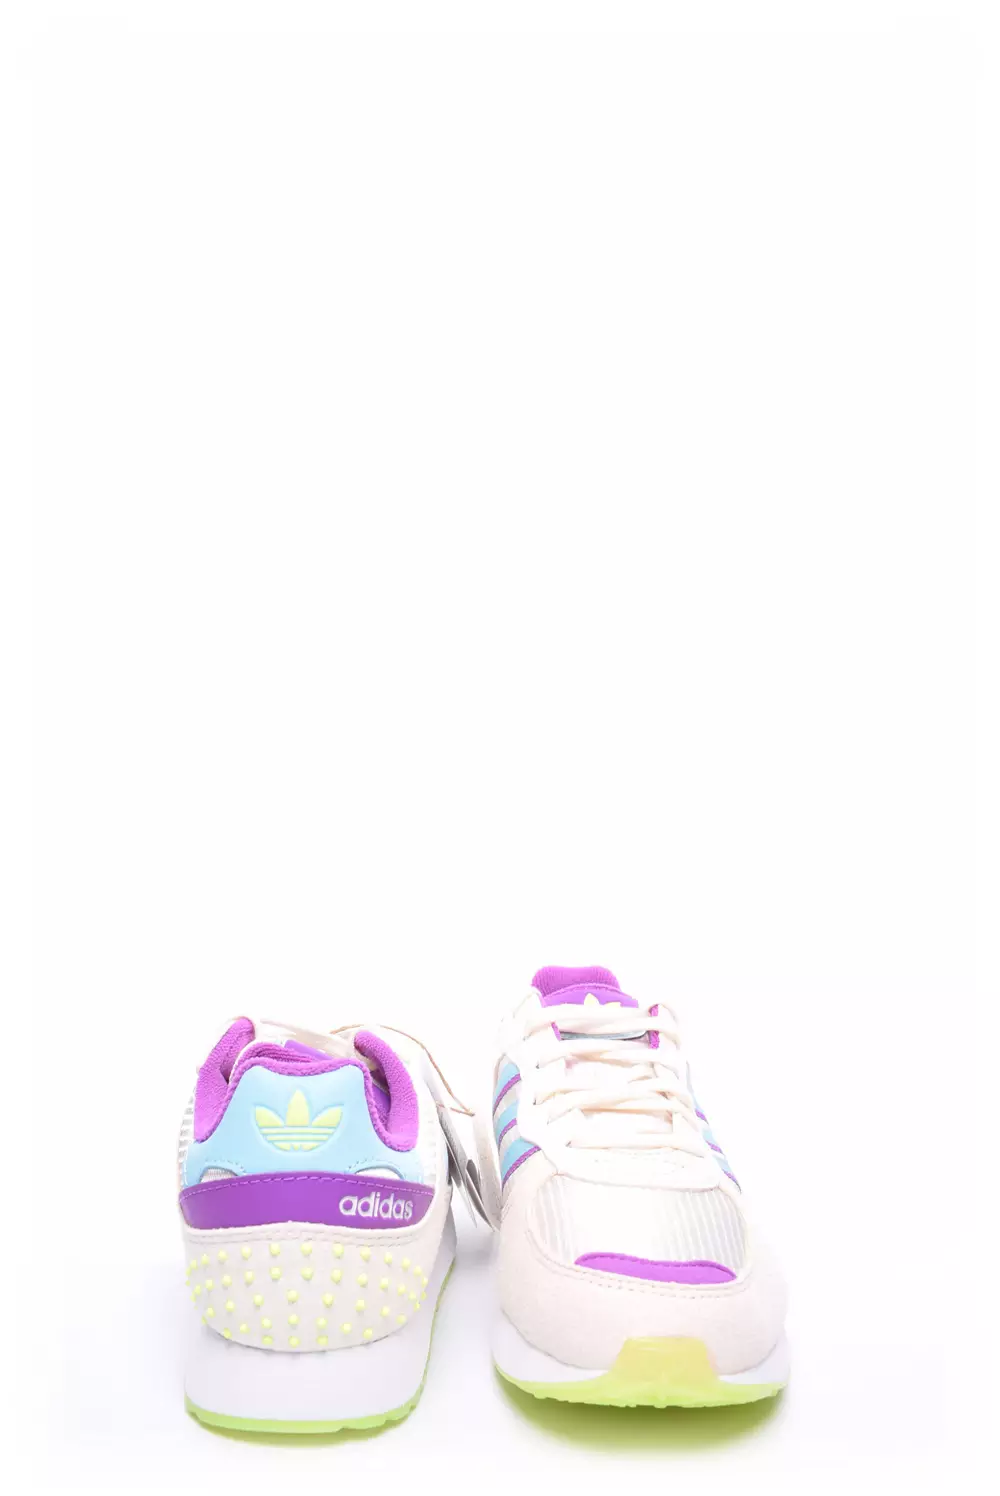 diagonal century Pidgin Sneakers dama Special 21 - Adidas | Shoemix.ro